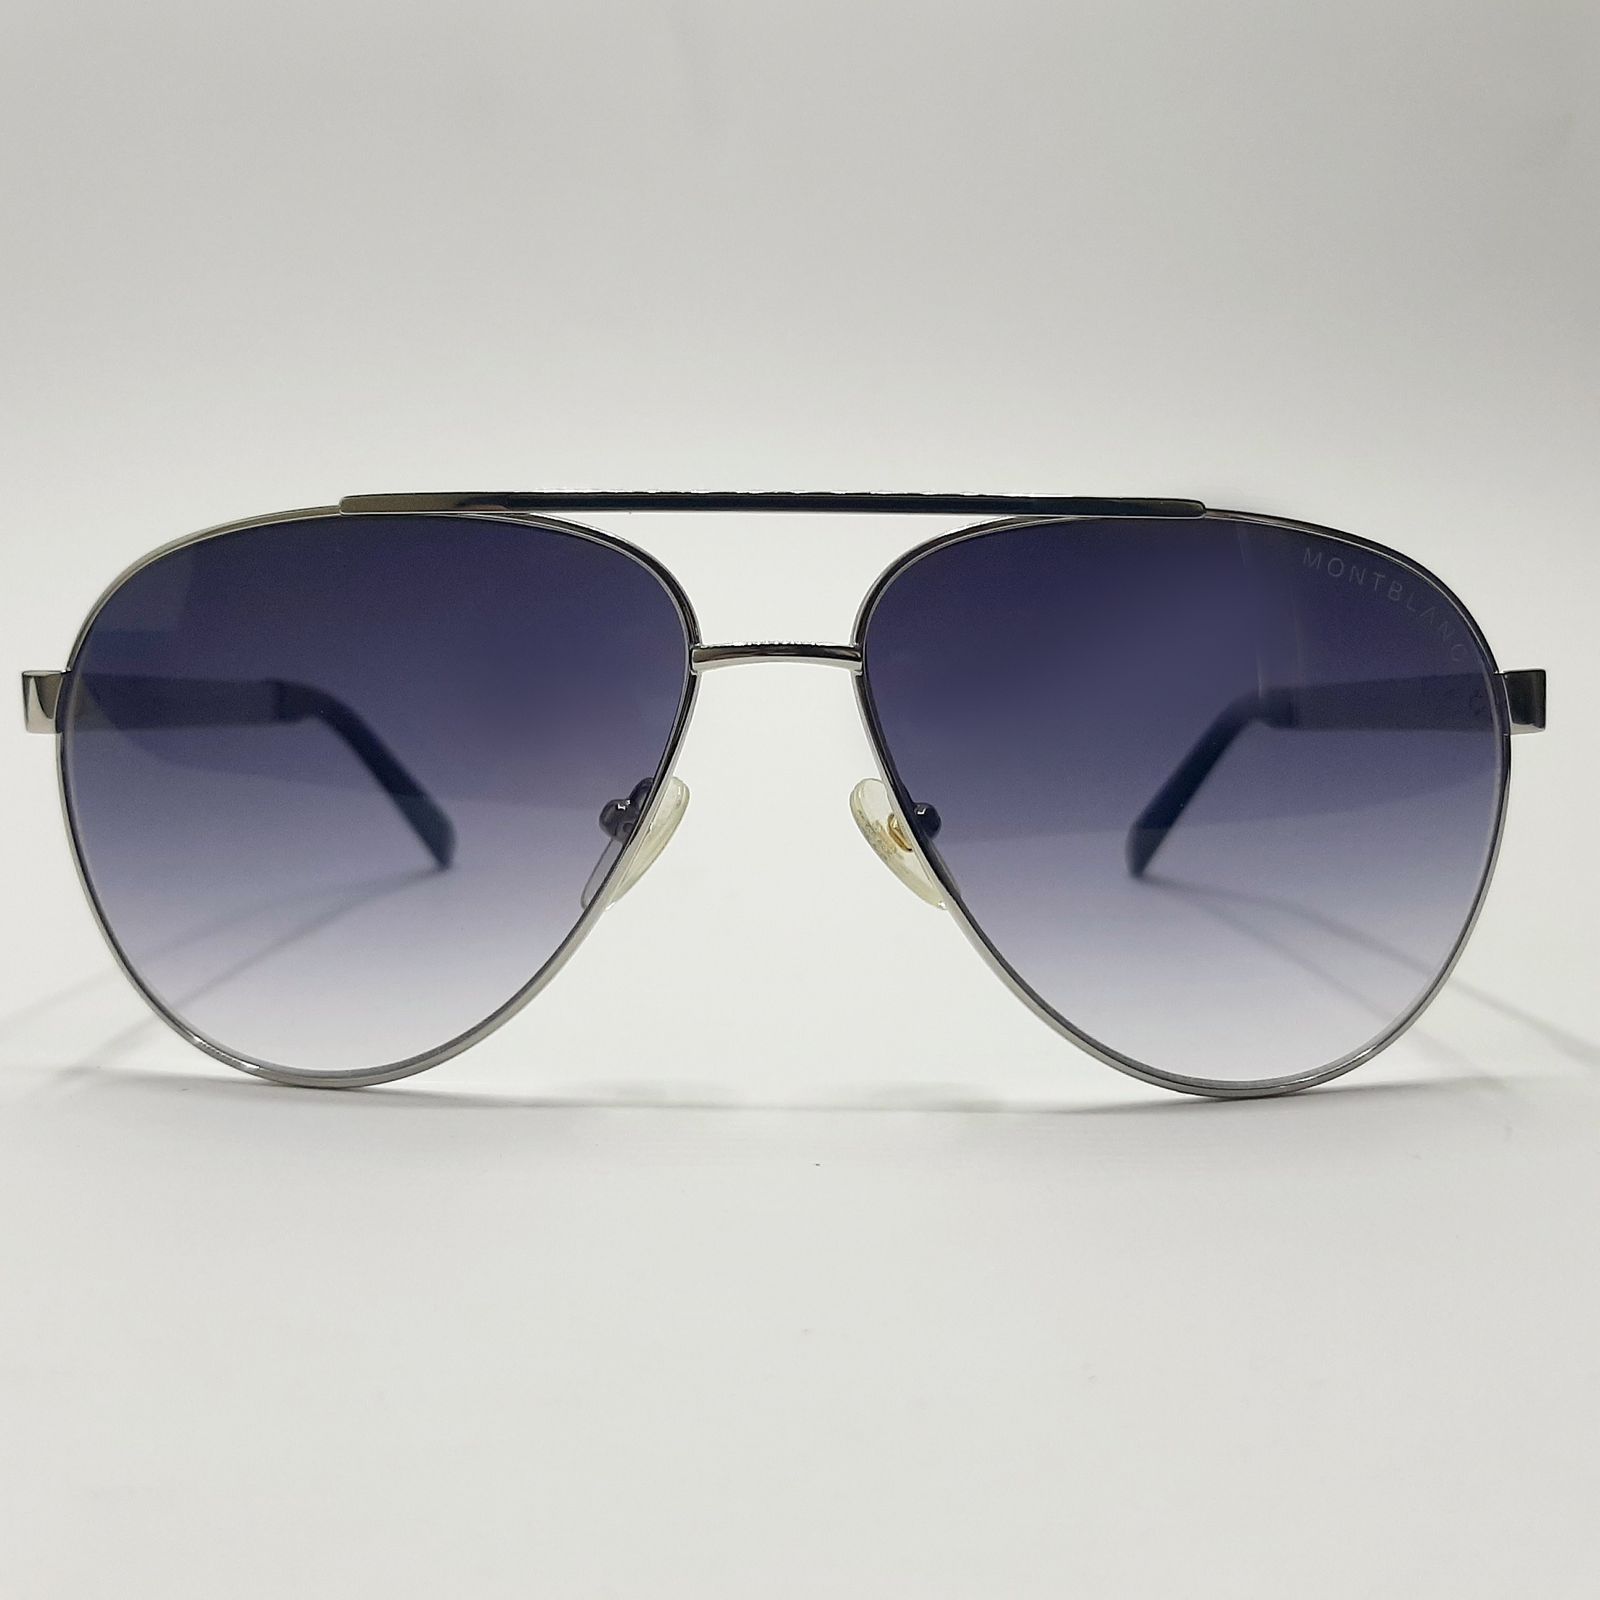 عینک آفتابی مون بلان مدل MB904c05 -  - 3